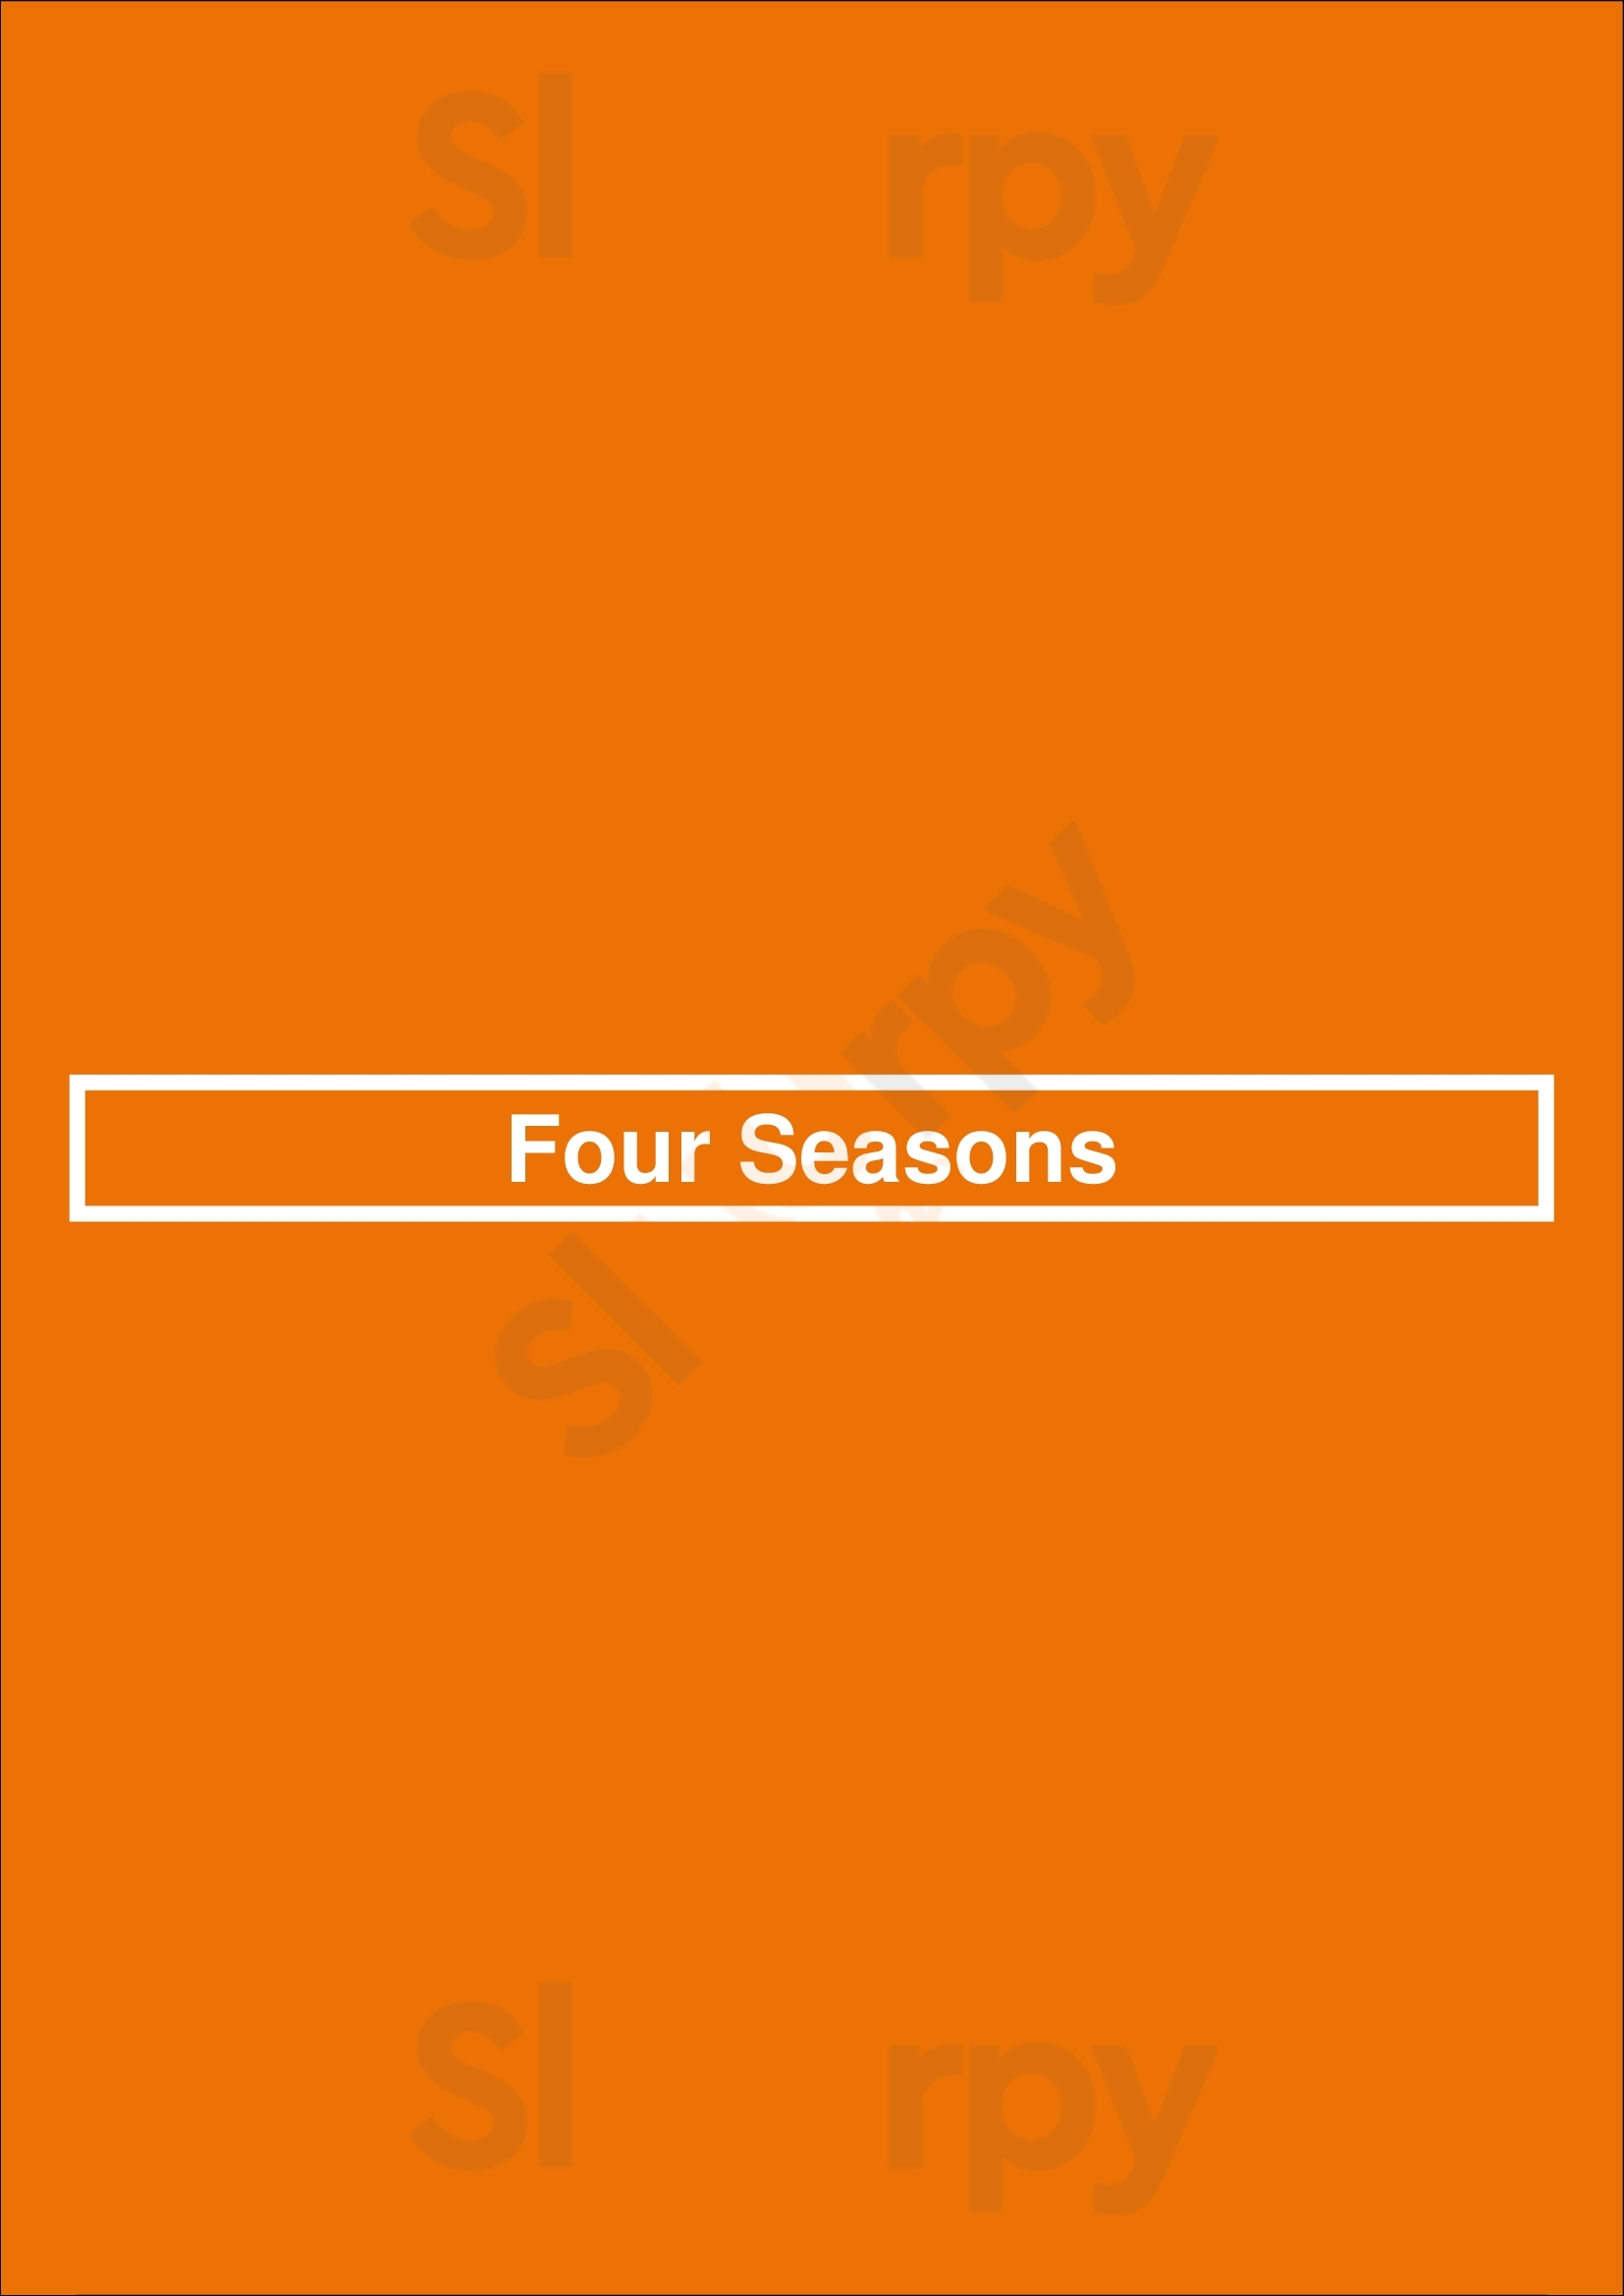 Four Seasons Liverpool Menu - 1